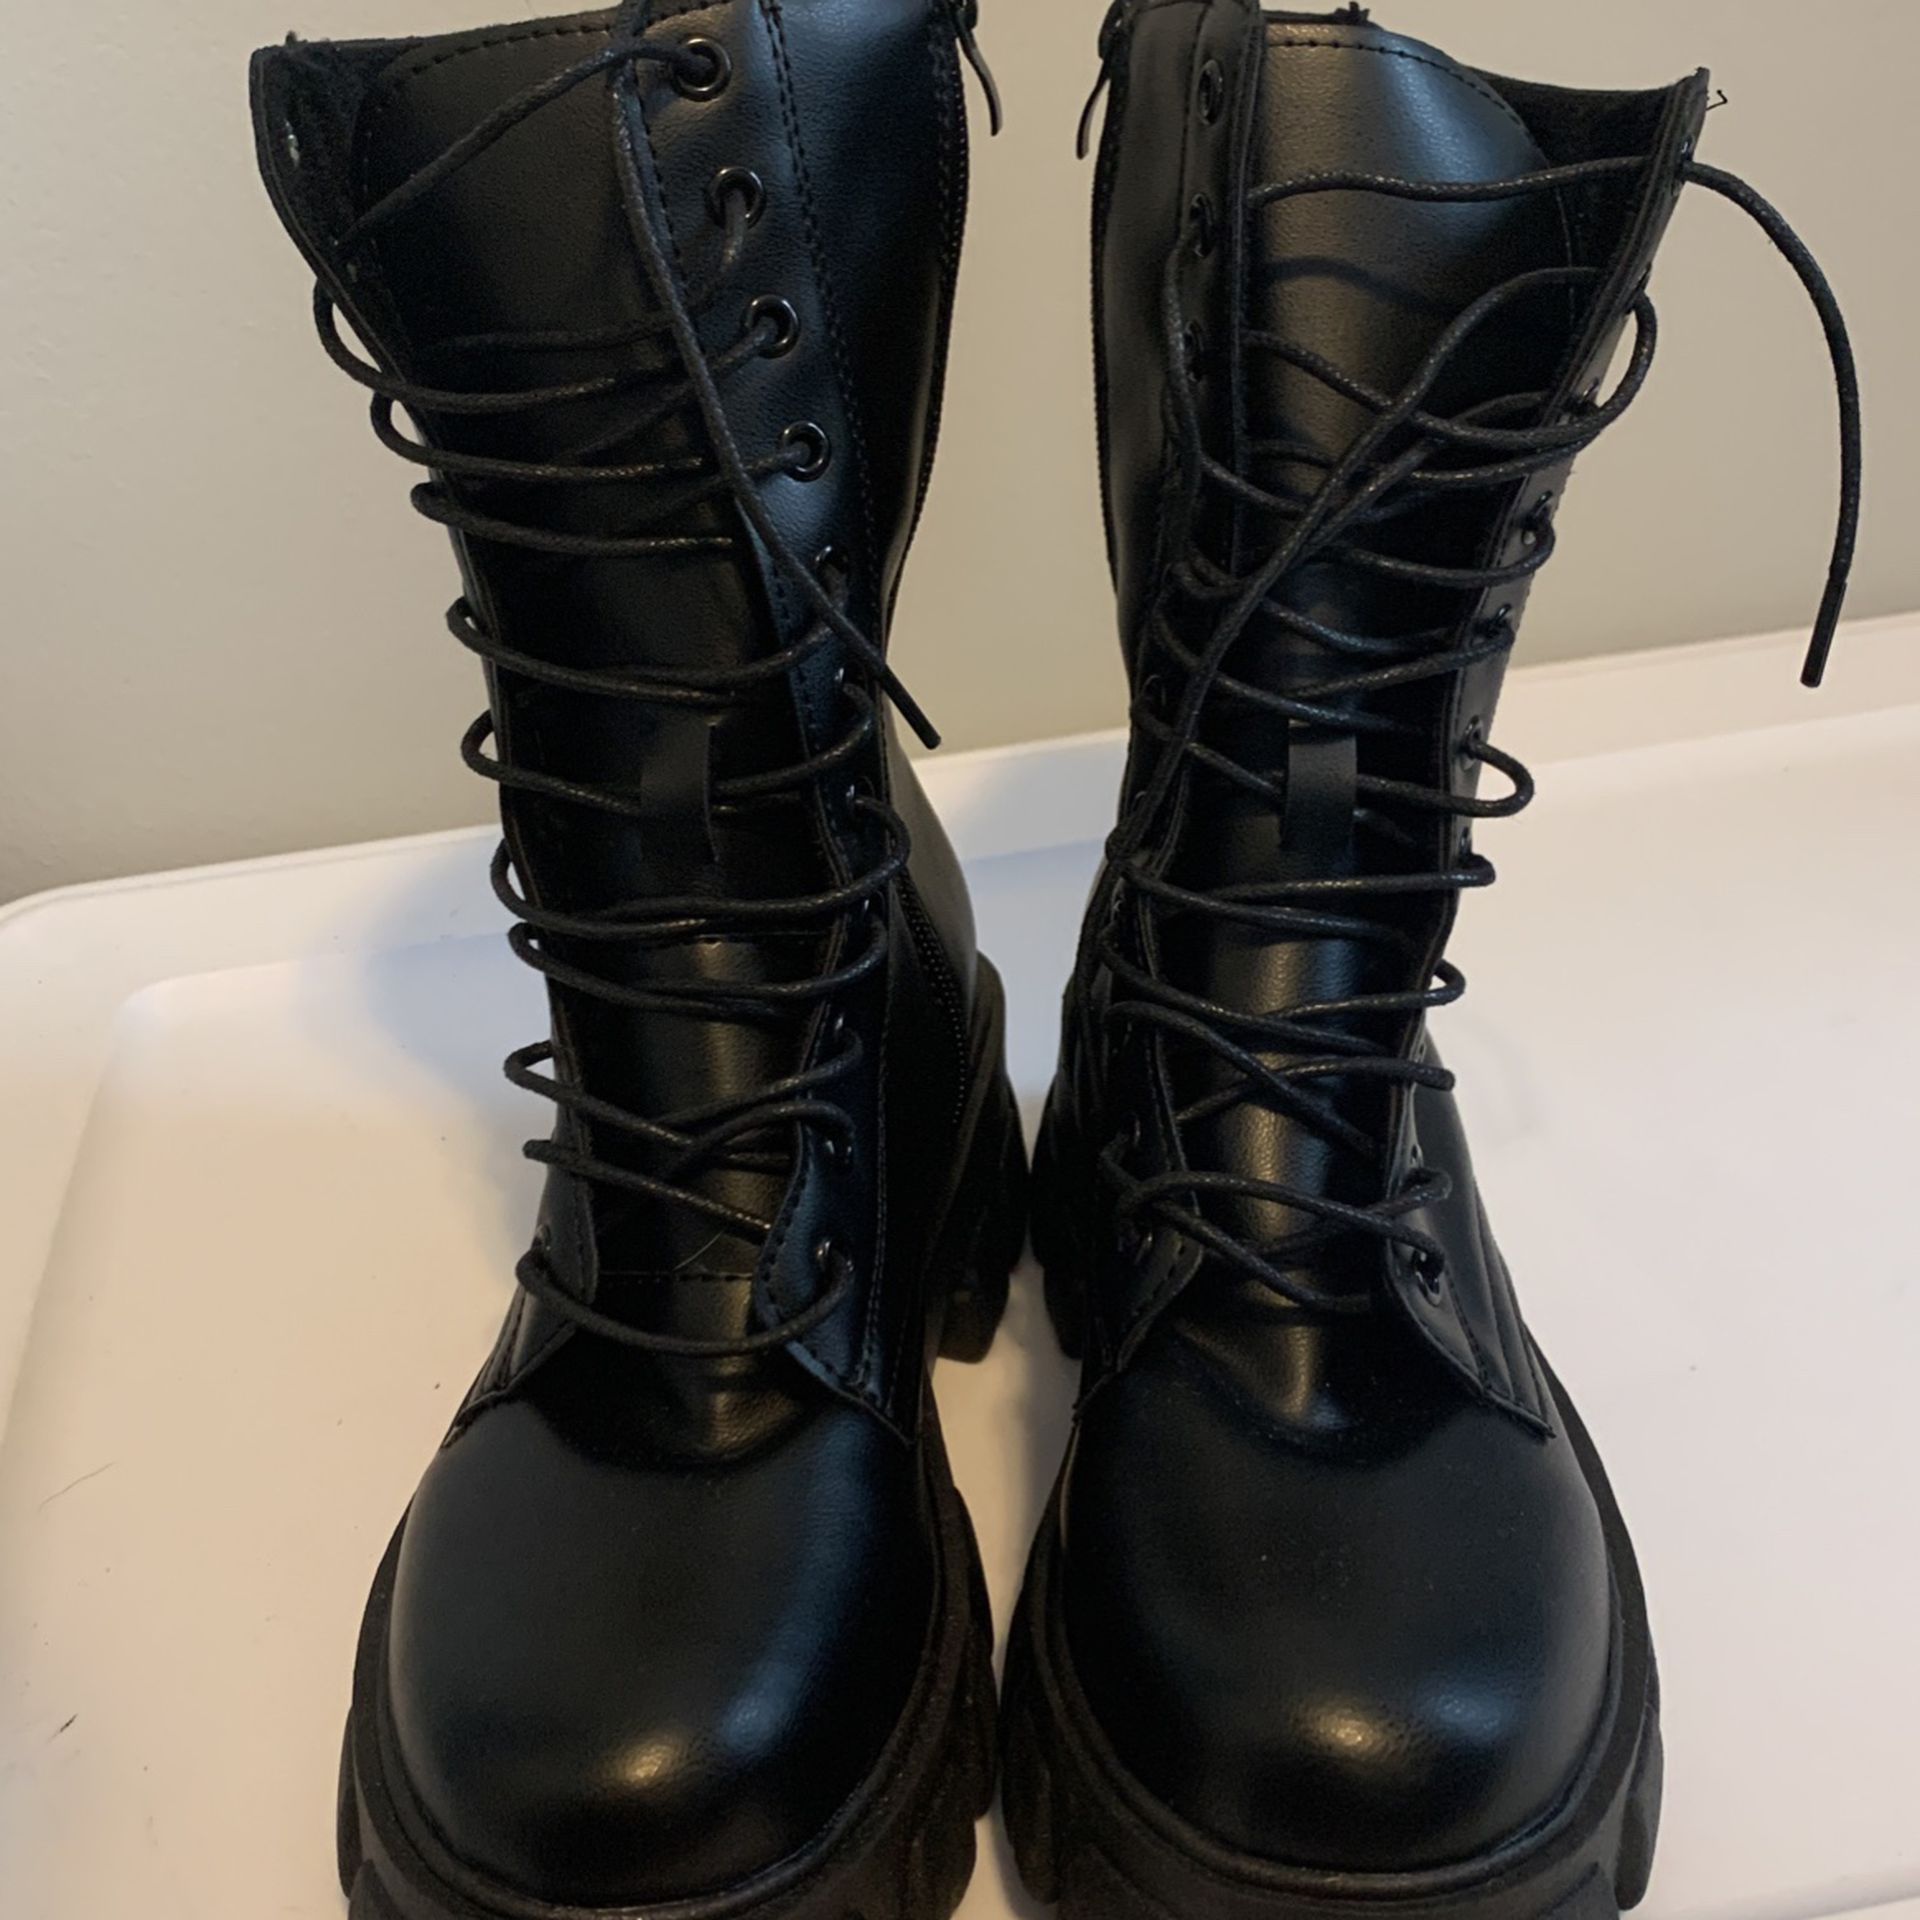 Brand New Combat Boots